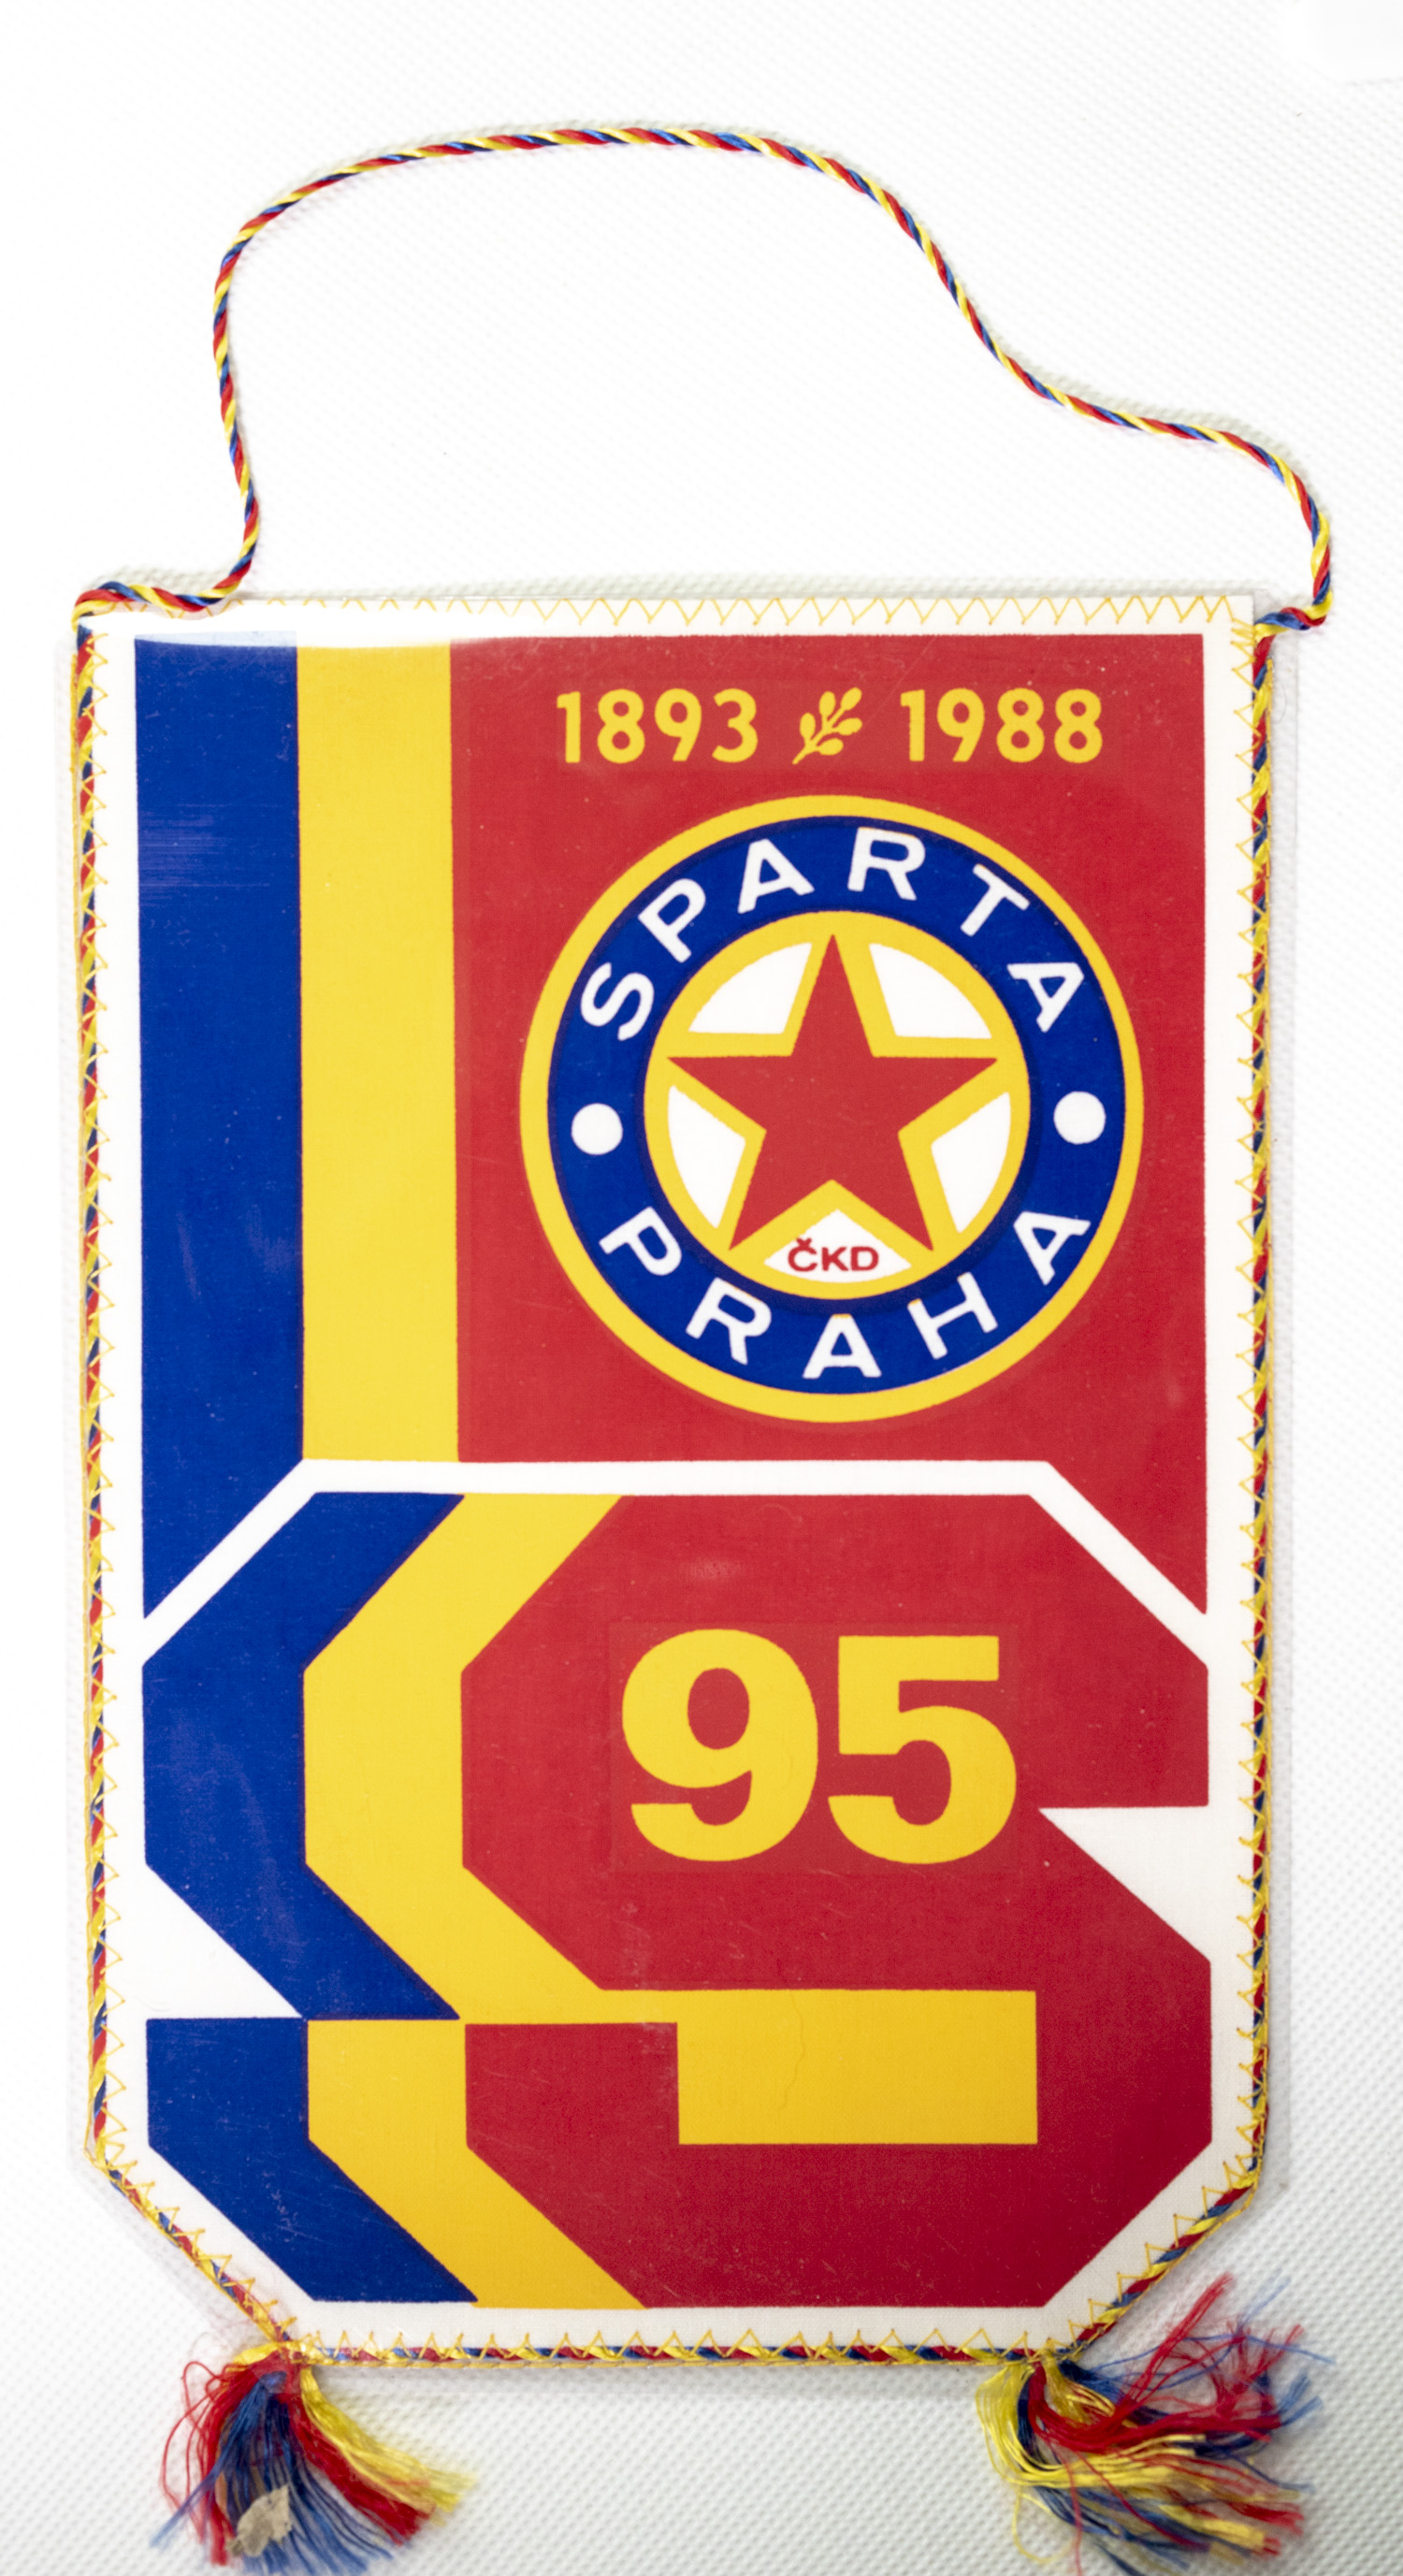 Klubová vlajka Sparta Praha ČKD, 95 let, 1988